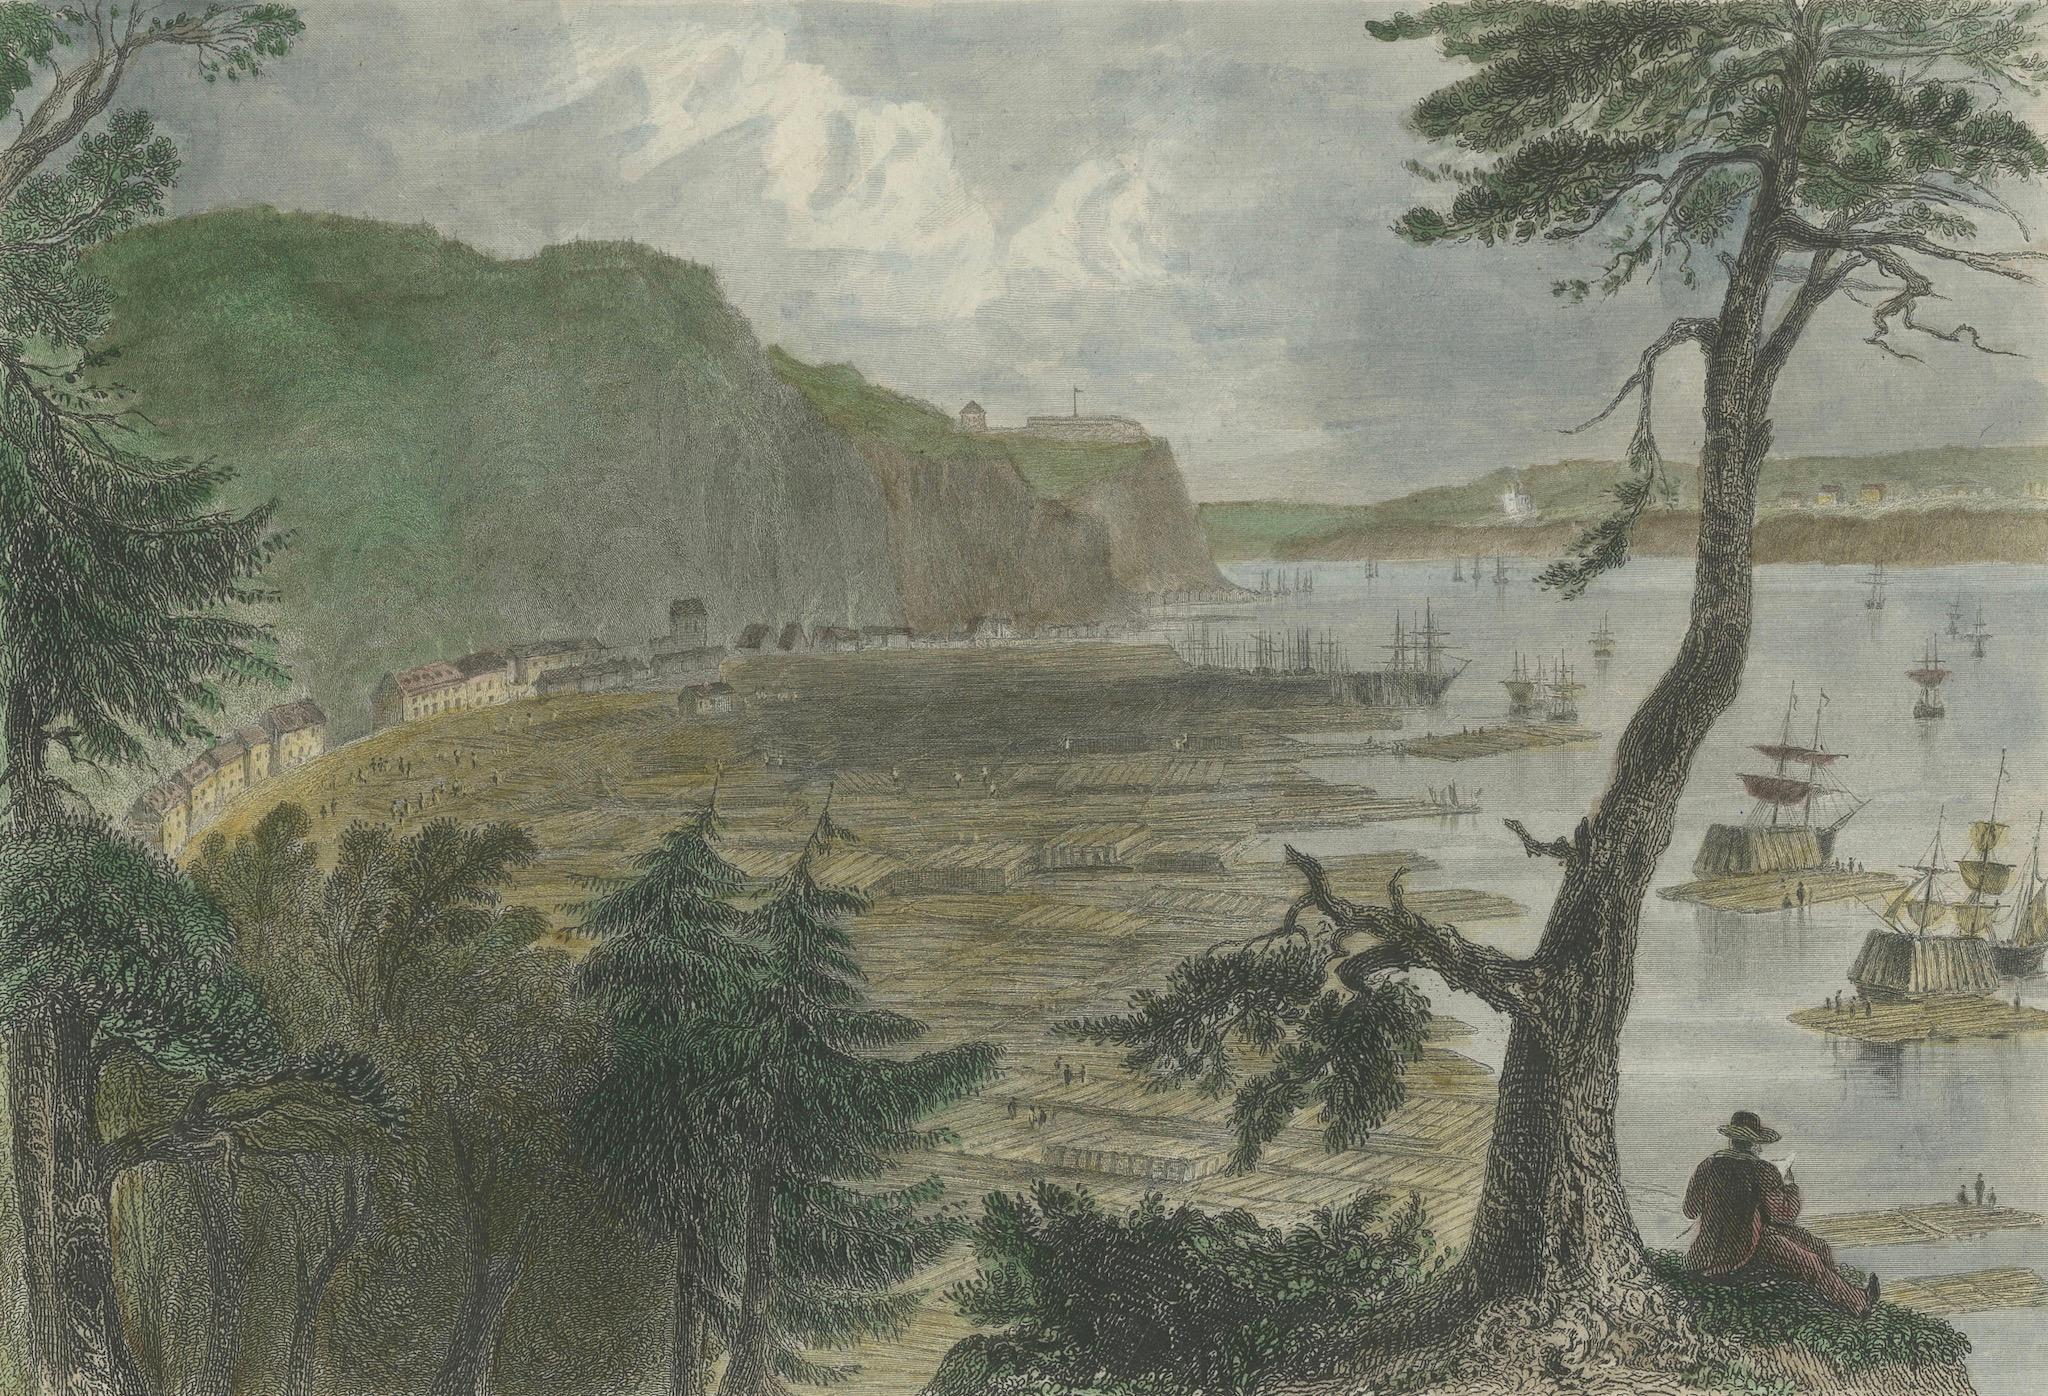 Gravur eines Holztopfes am St Lawrence River in der Nähe der Stadt Quebec, 1850 im Angebot 1